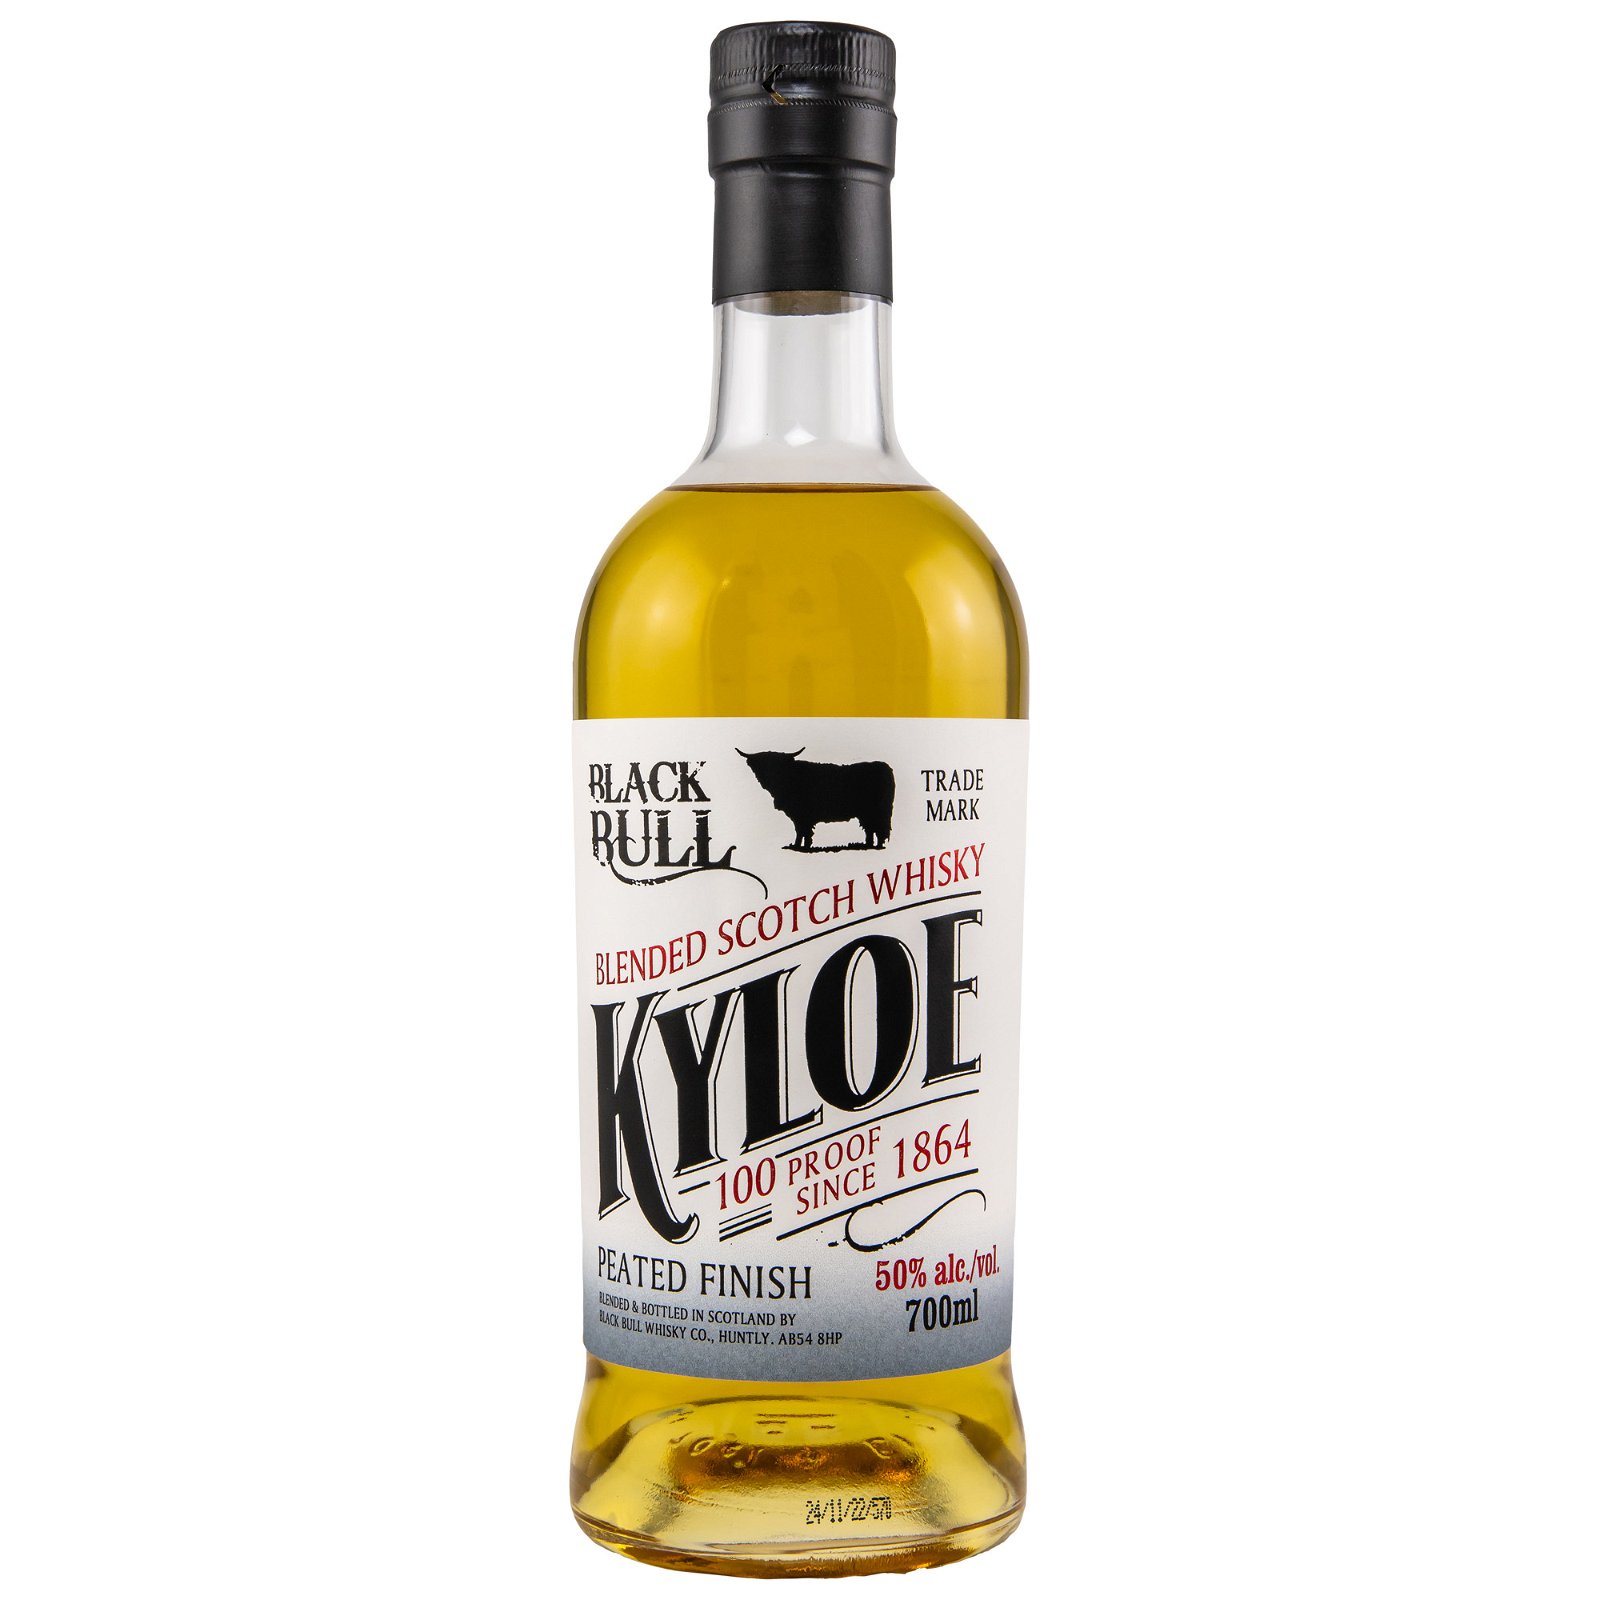 Black Bull Kyloe Blended Scotch Peated Finish